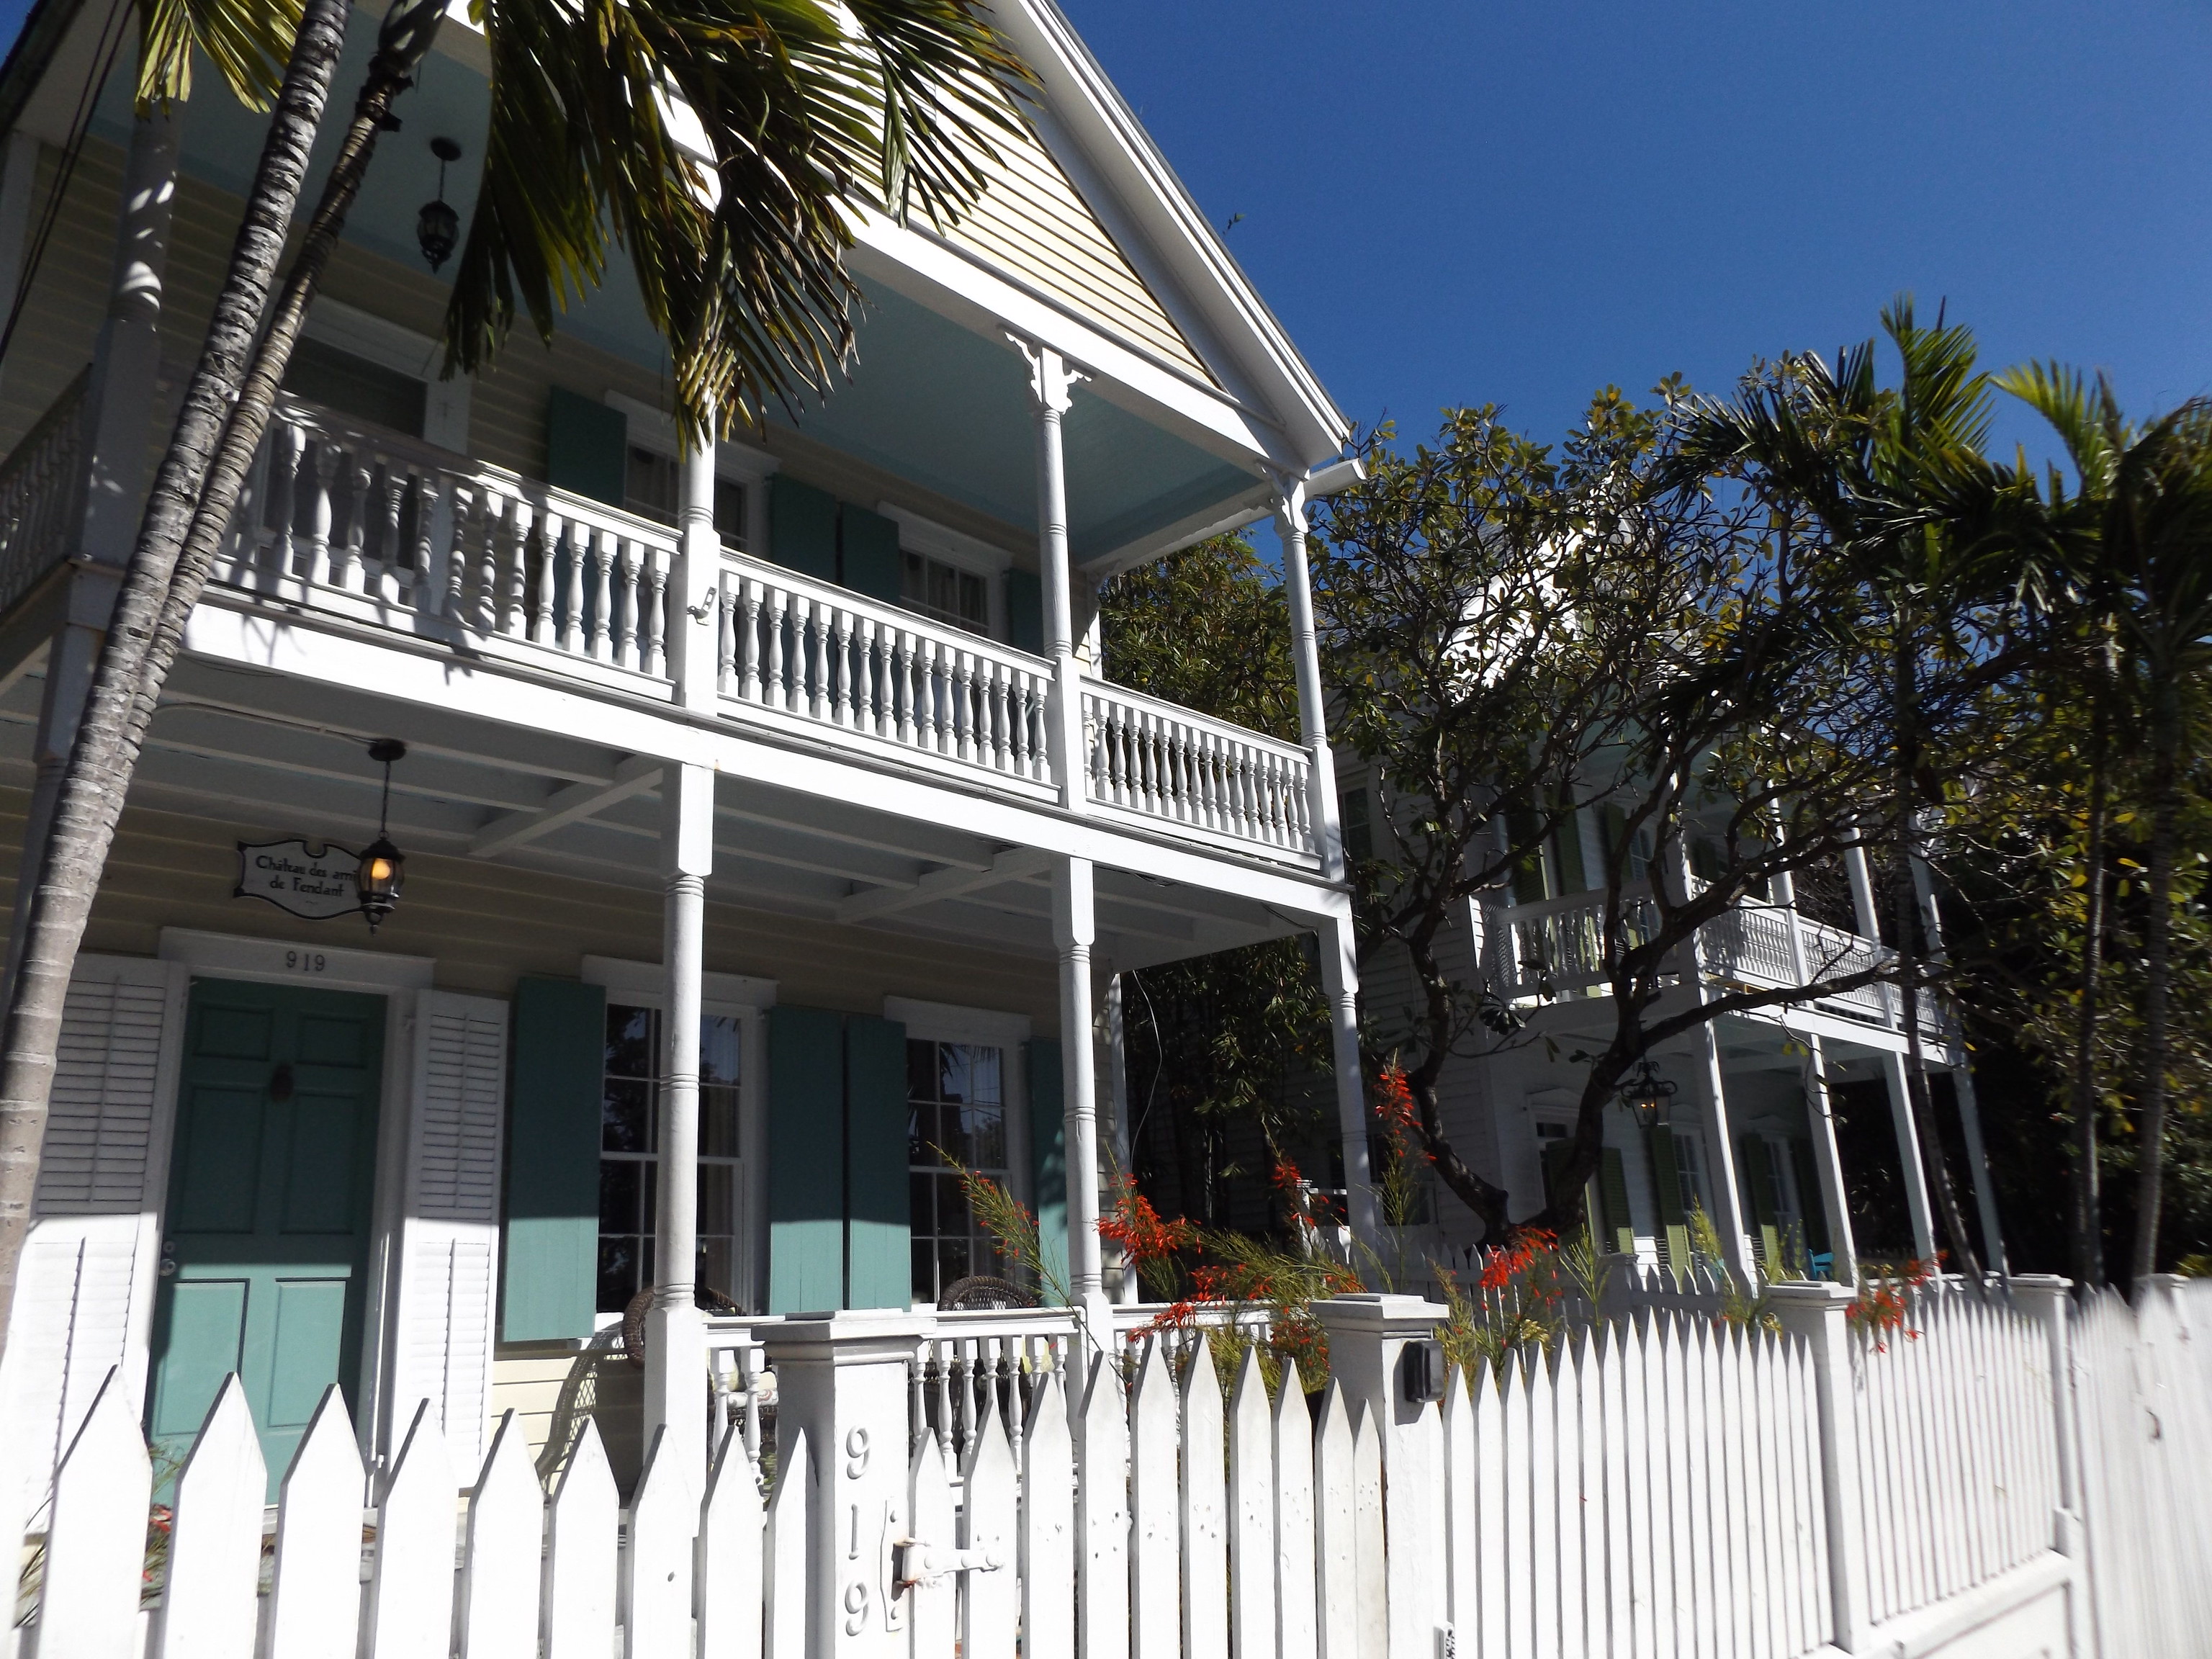 Villas in Whitehead Street, Key West, Florida, United States, 28 December 2019